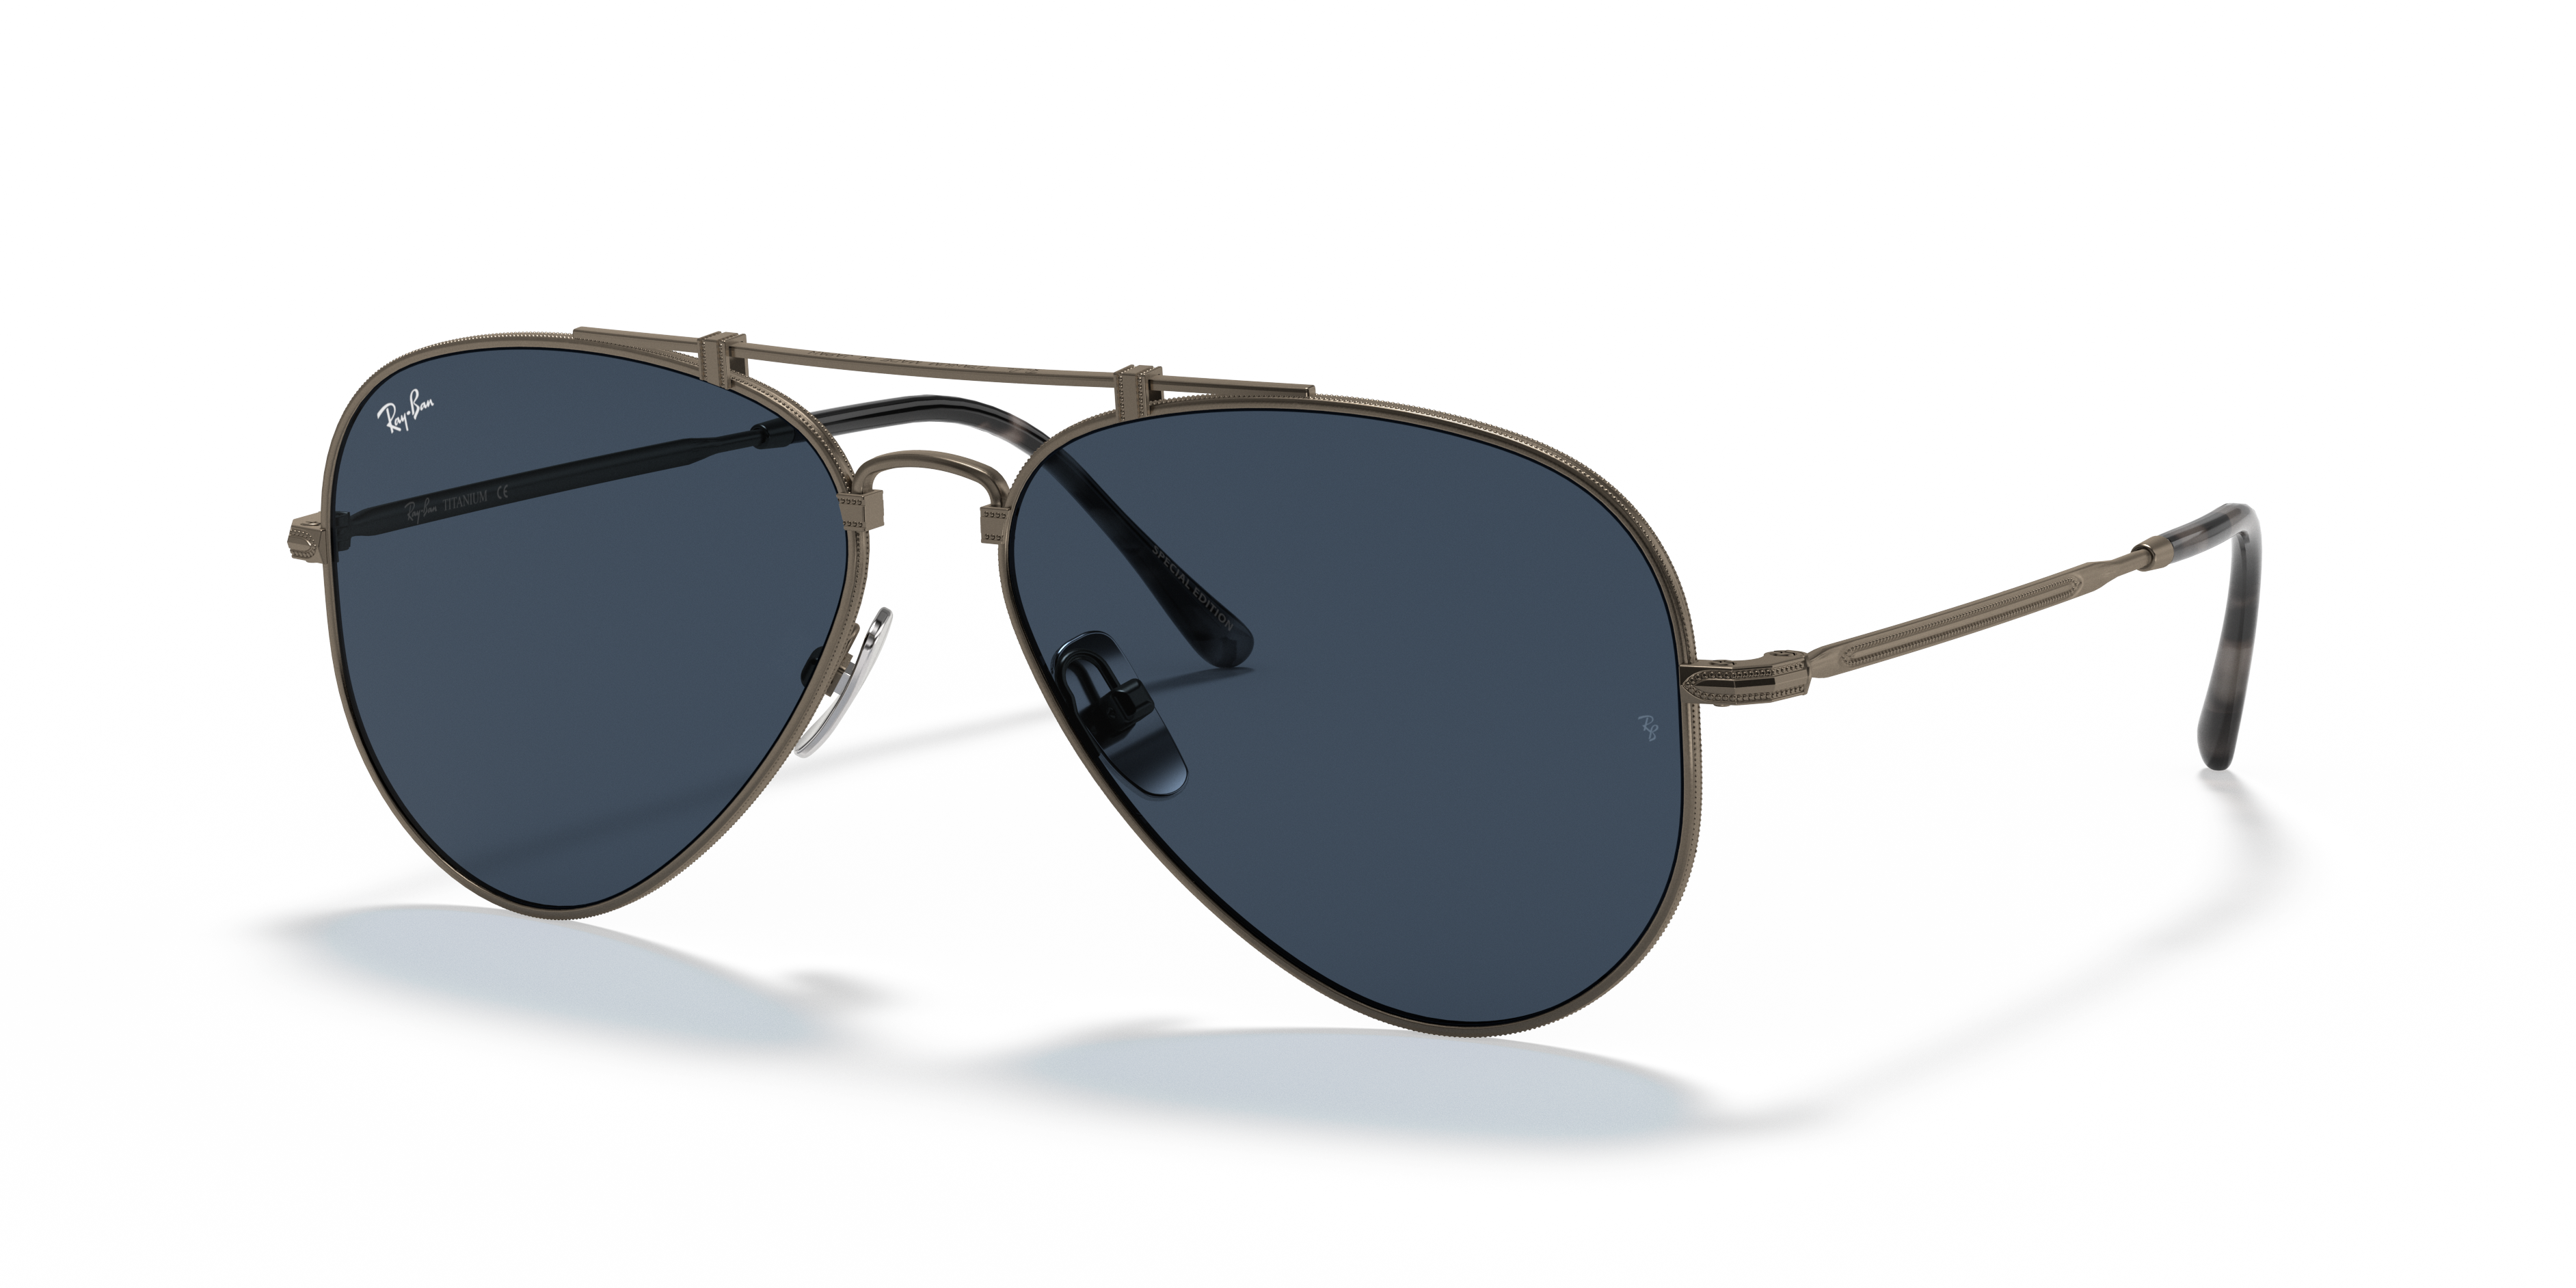 AVIATOR TITANIUM Sunglasses in Grey and Blue | Ray-Ban®